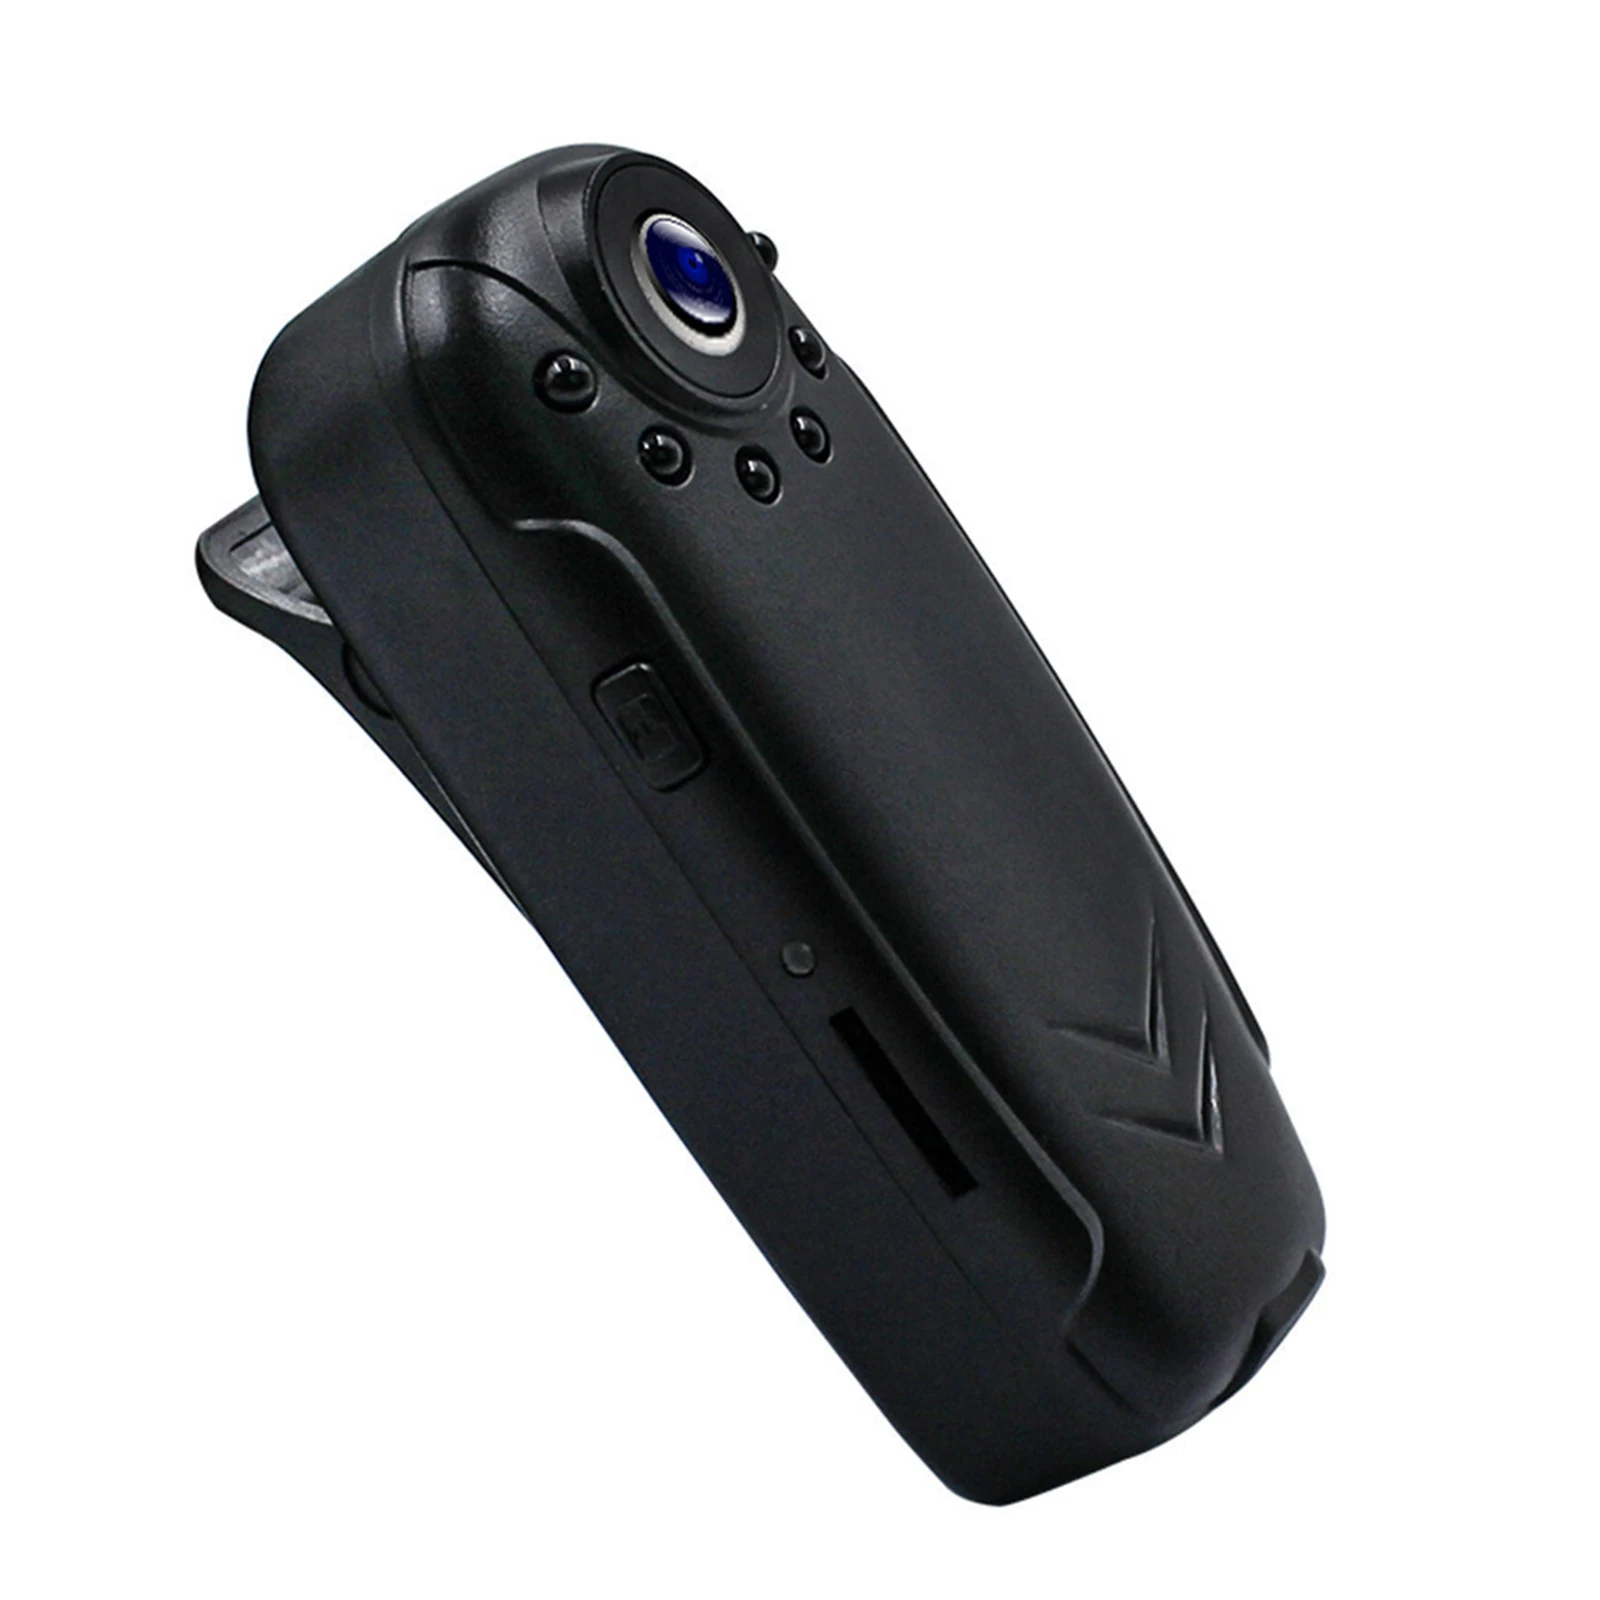 Portable Cam DV Body Camera HD 1080P, with Smart PIR Motion Detection